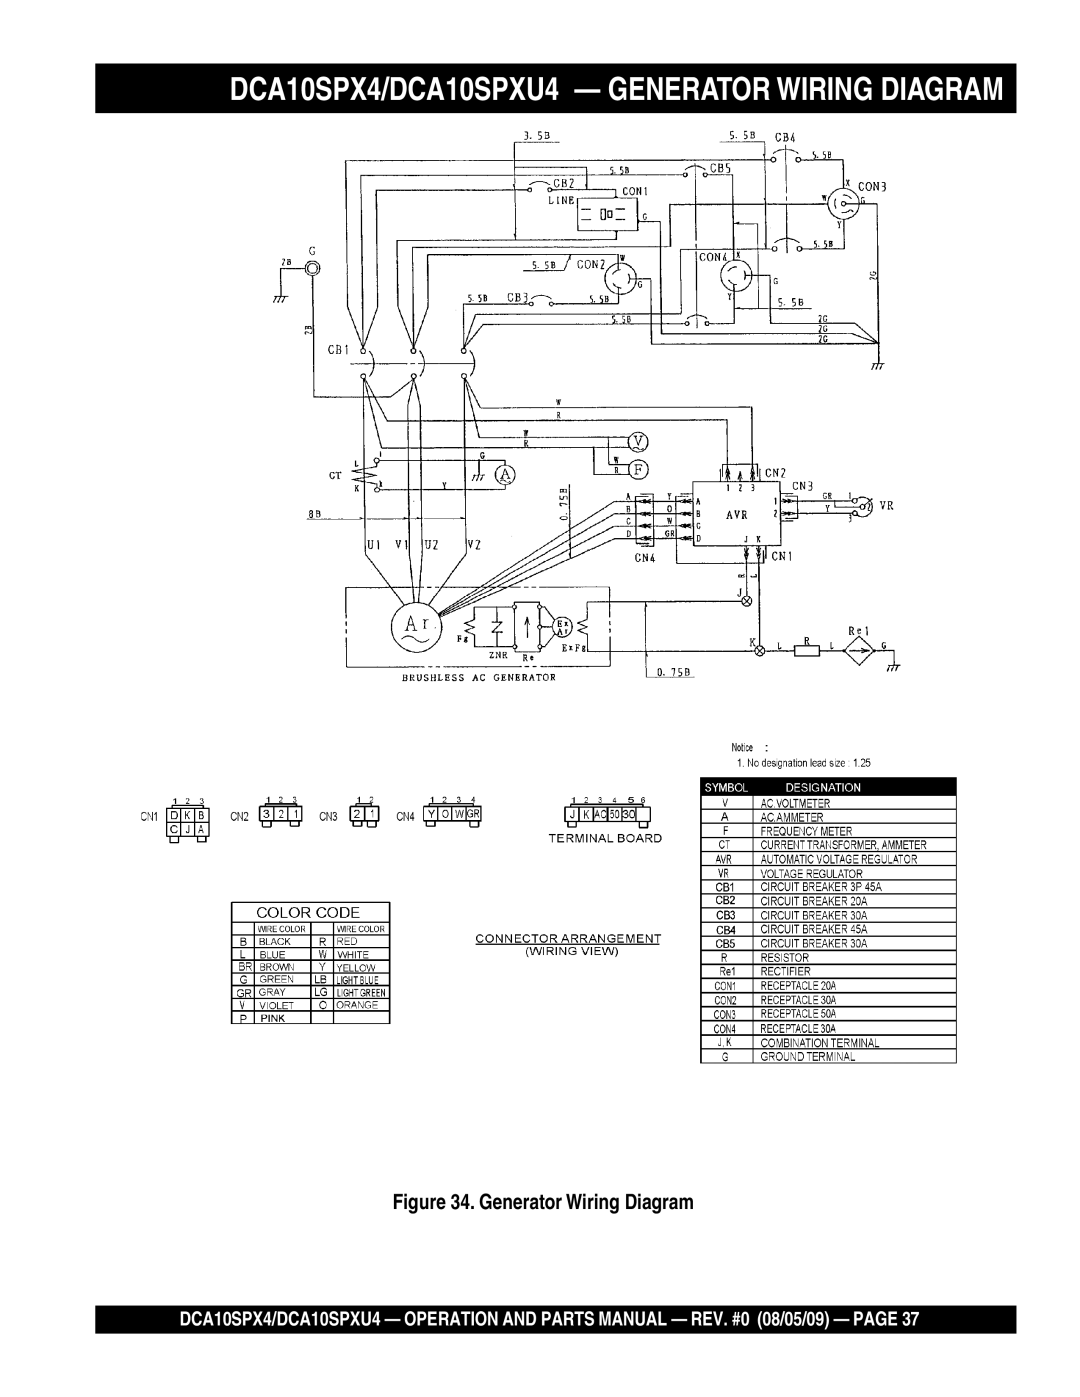 Multiquip operation manual DCA10SPX4/DCA10SPXU4 - GENERATOR WIRING DIAGRAM, Generator Wiring Diagram 